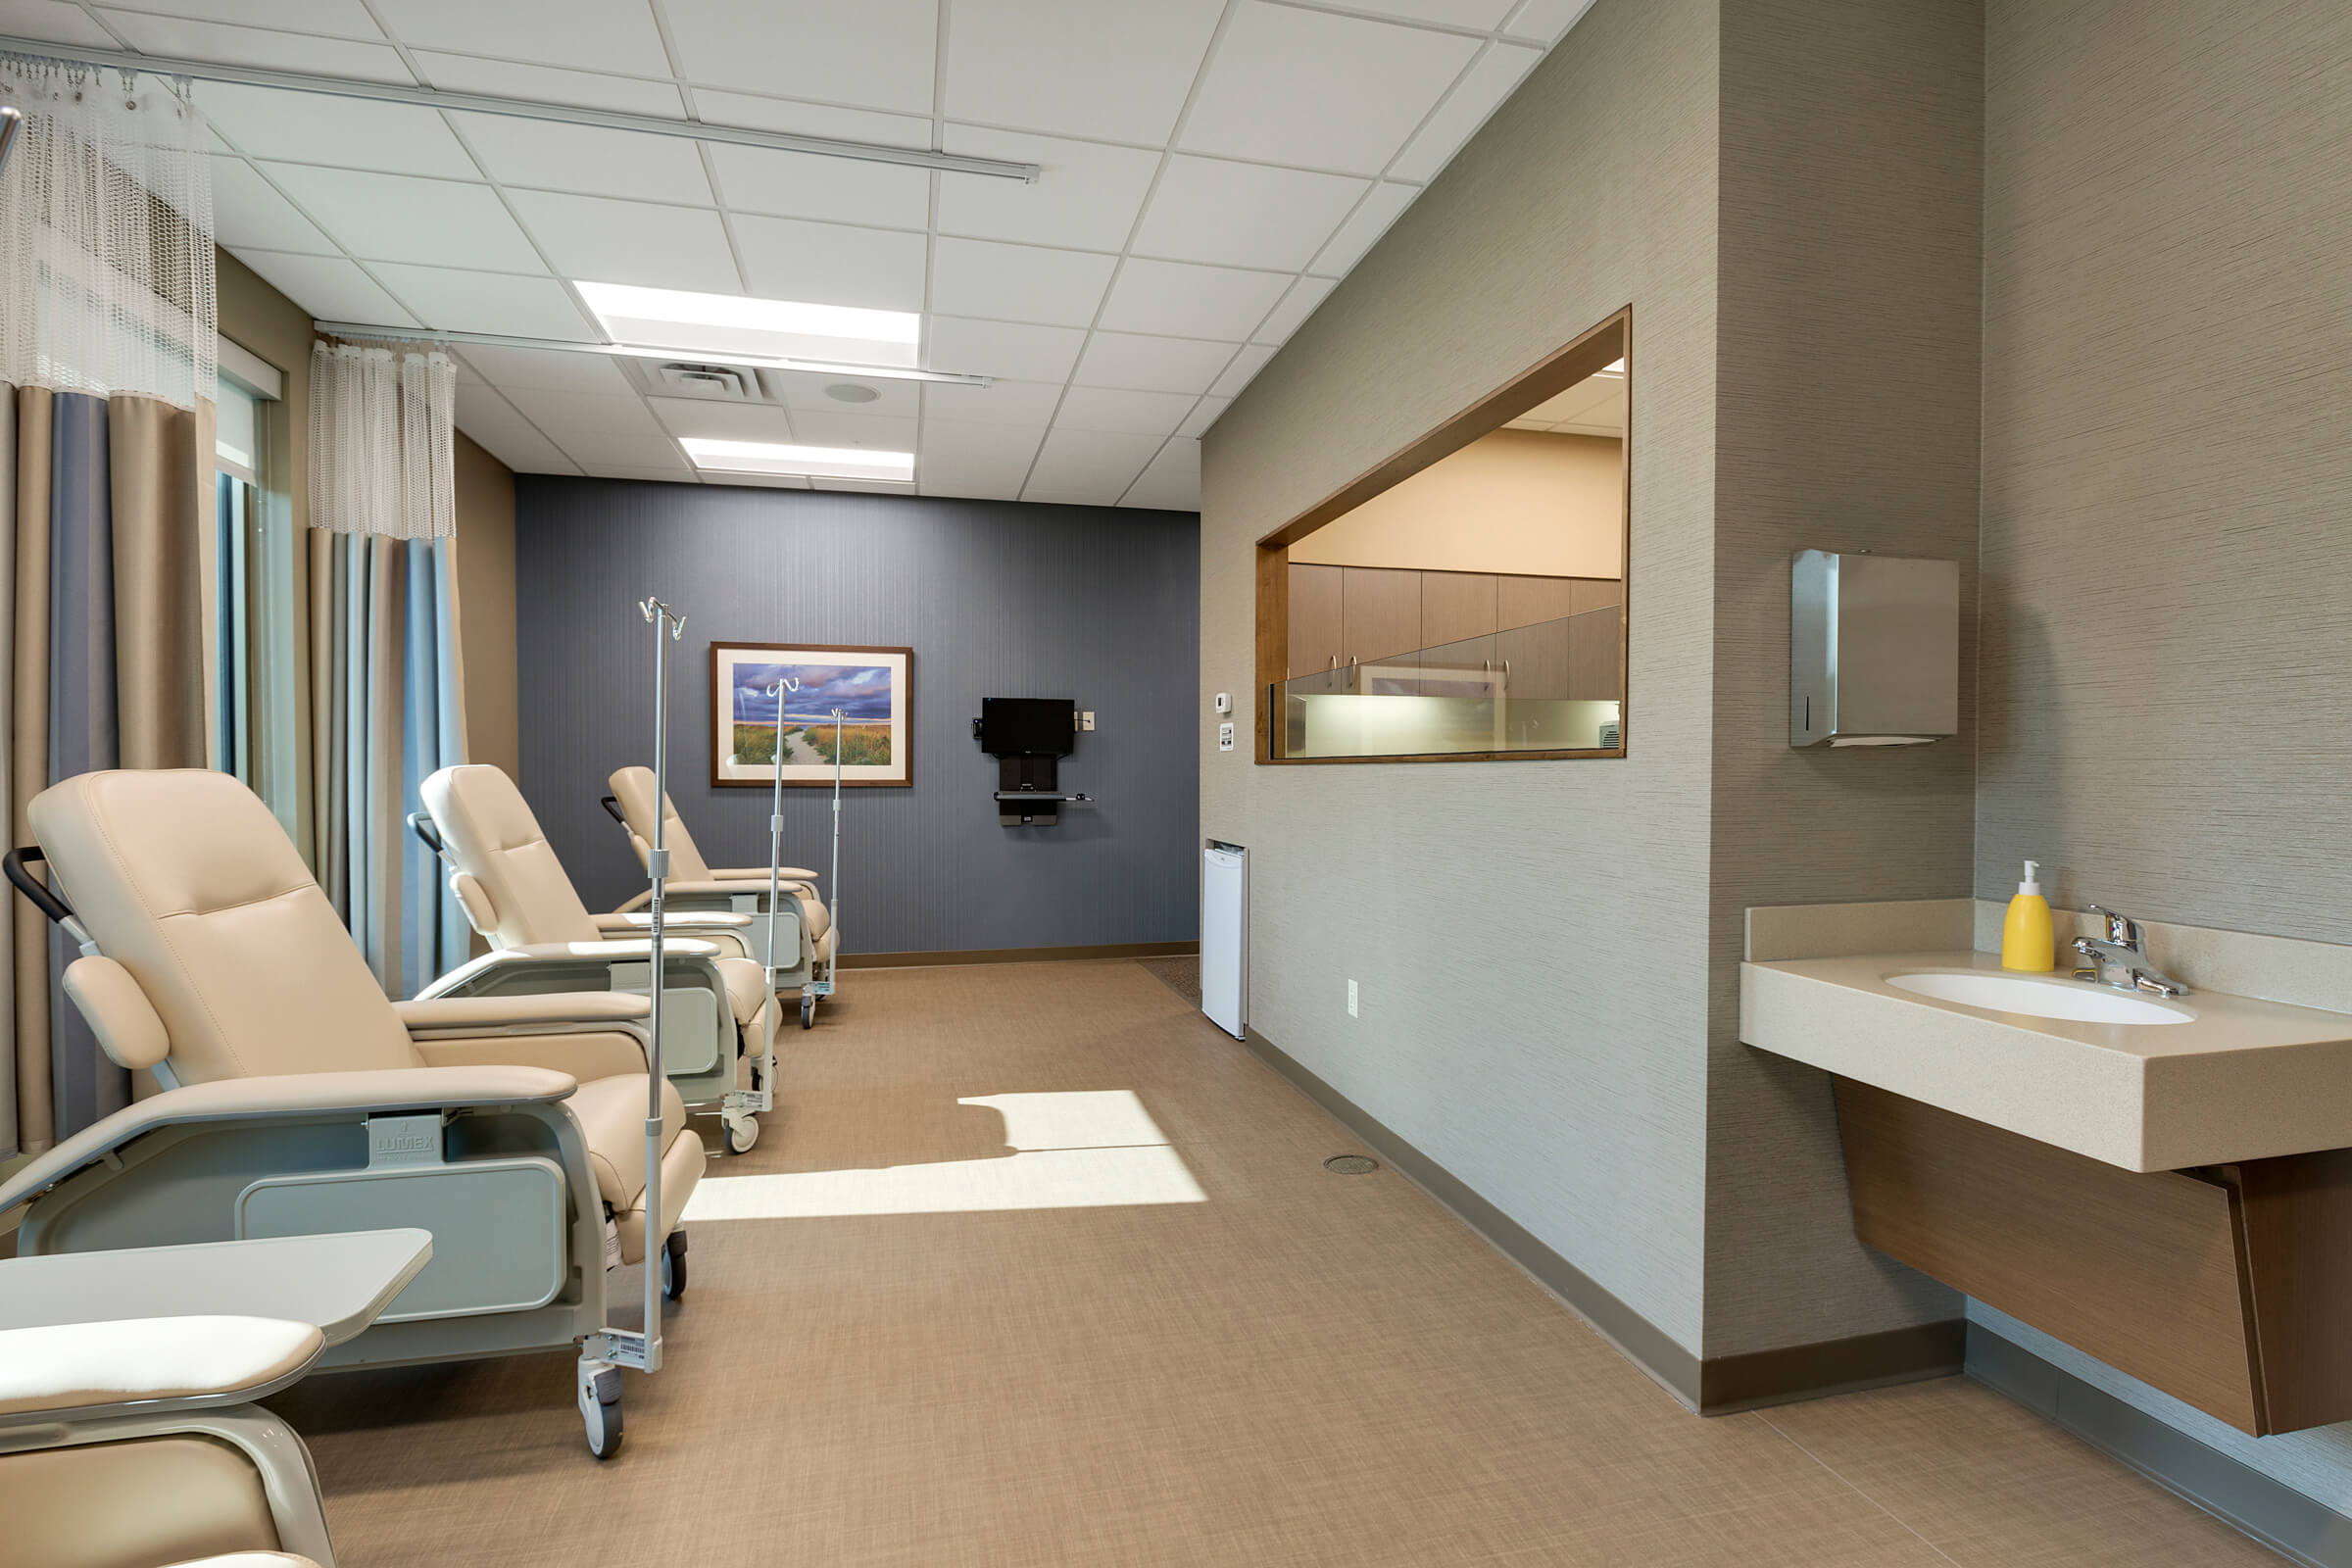 Maplewood Oral and Maxillofacial Surgery| Mohagen Hansen | Architecture | Interior Design | Minneapolis